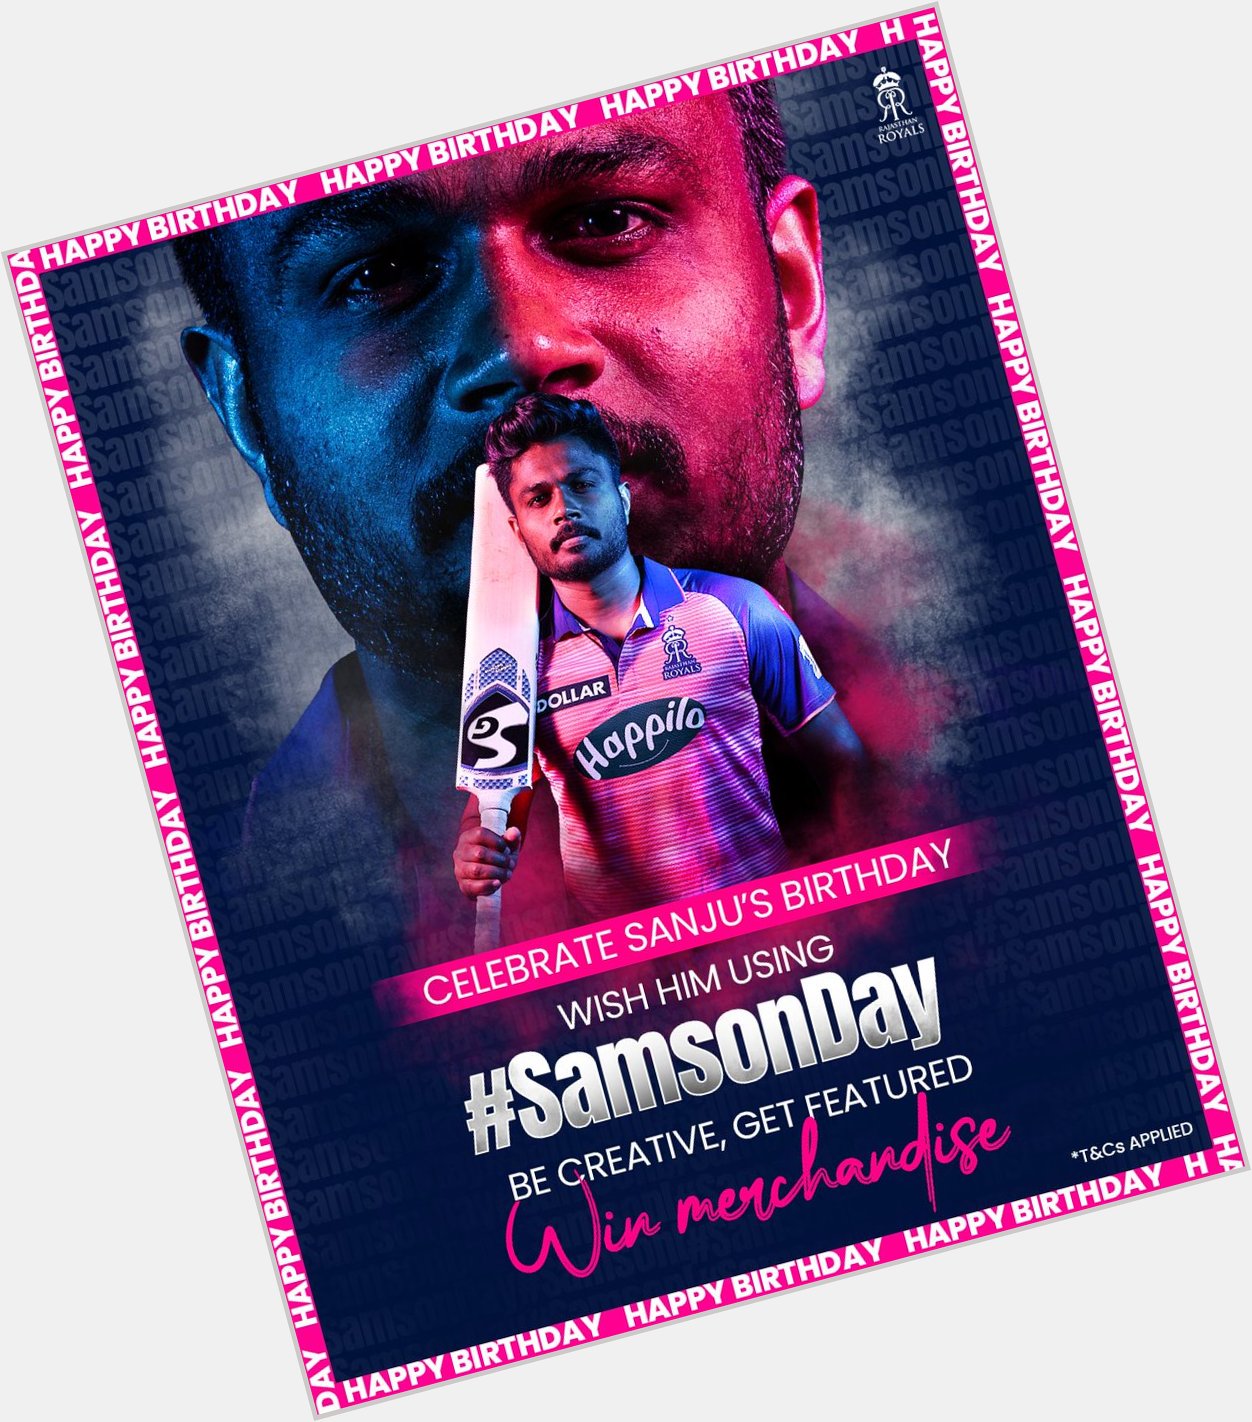 Wishing a very happy birthday to underrated legend Sanju Samson 